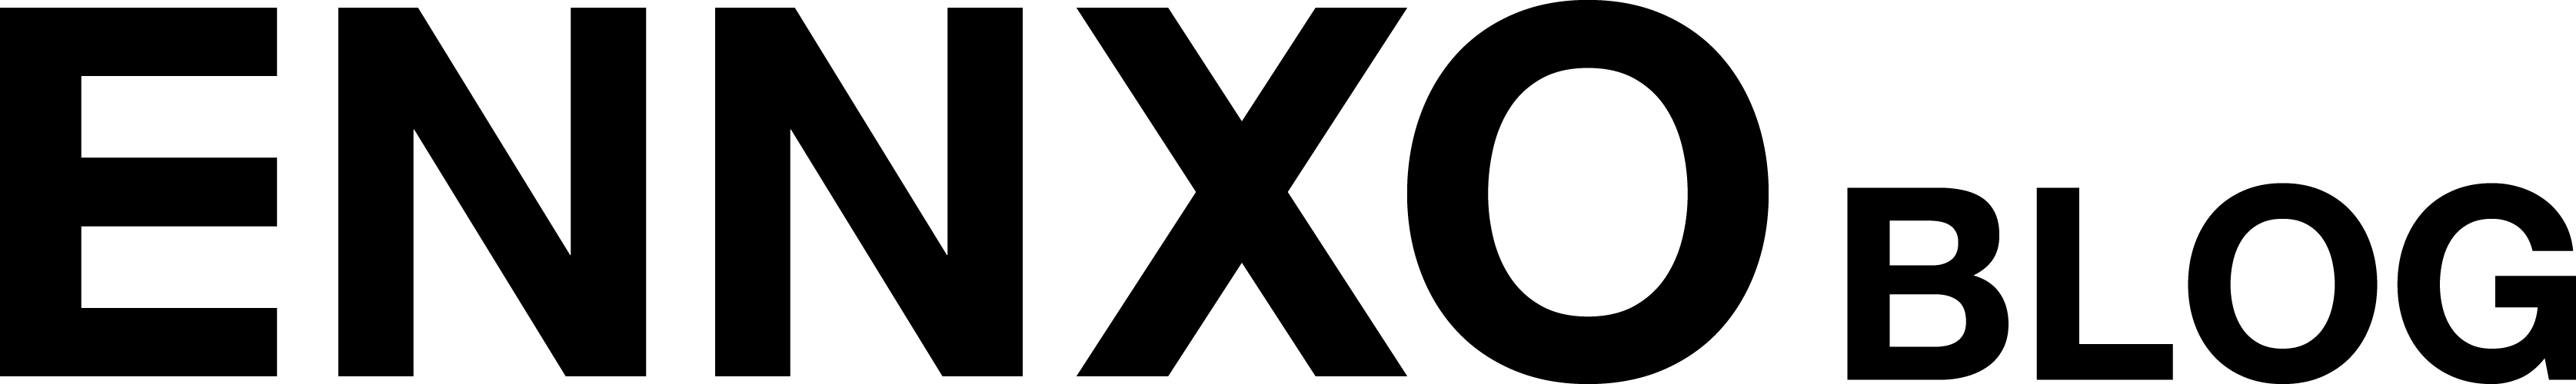 ENNXO Blog Logo